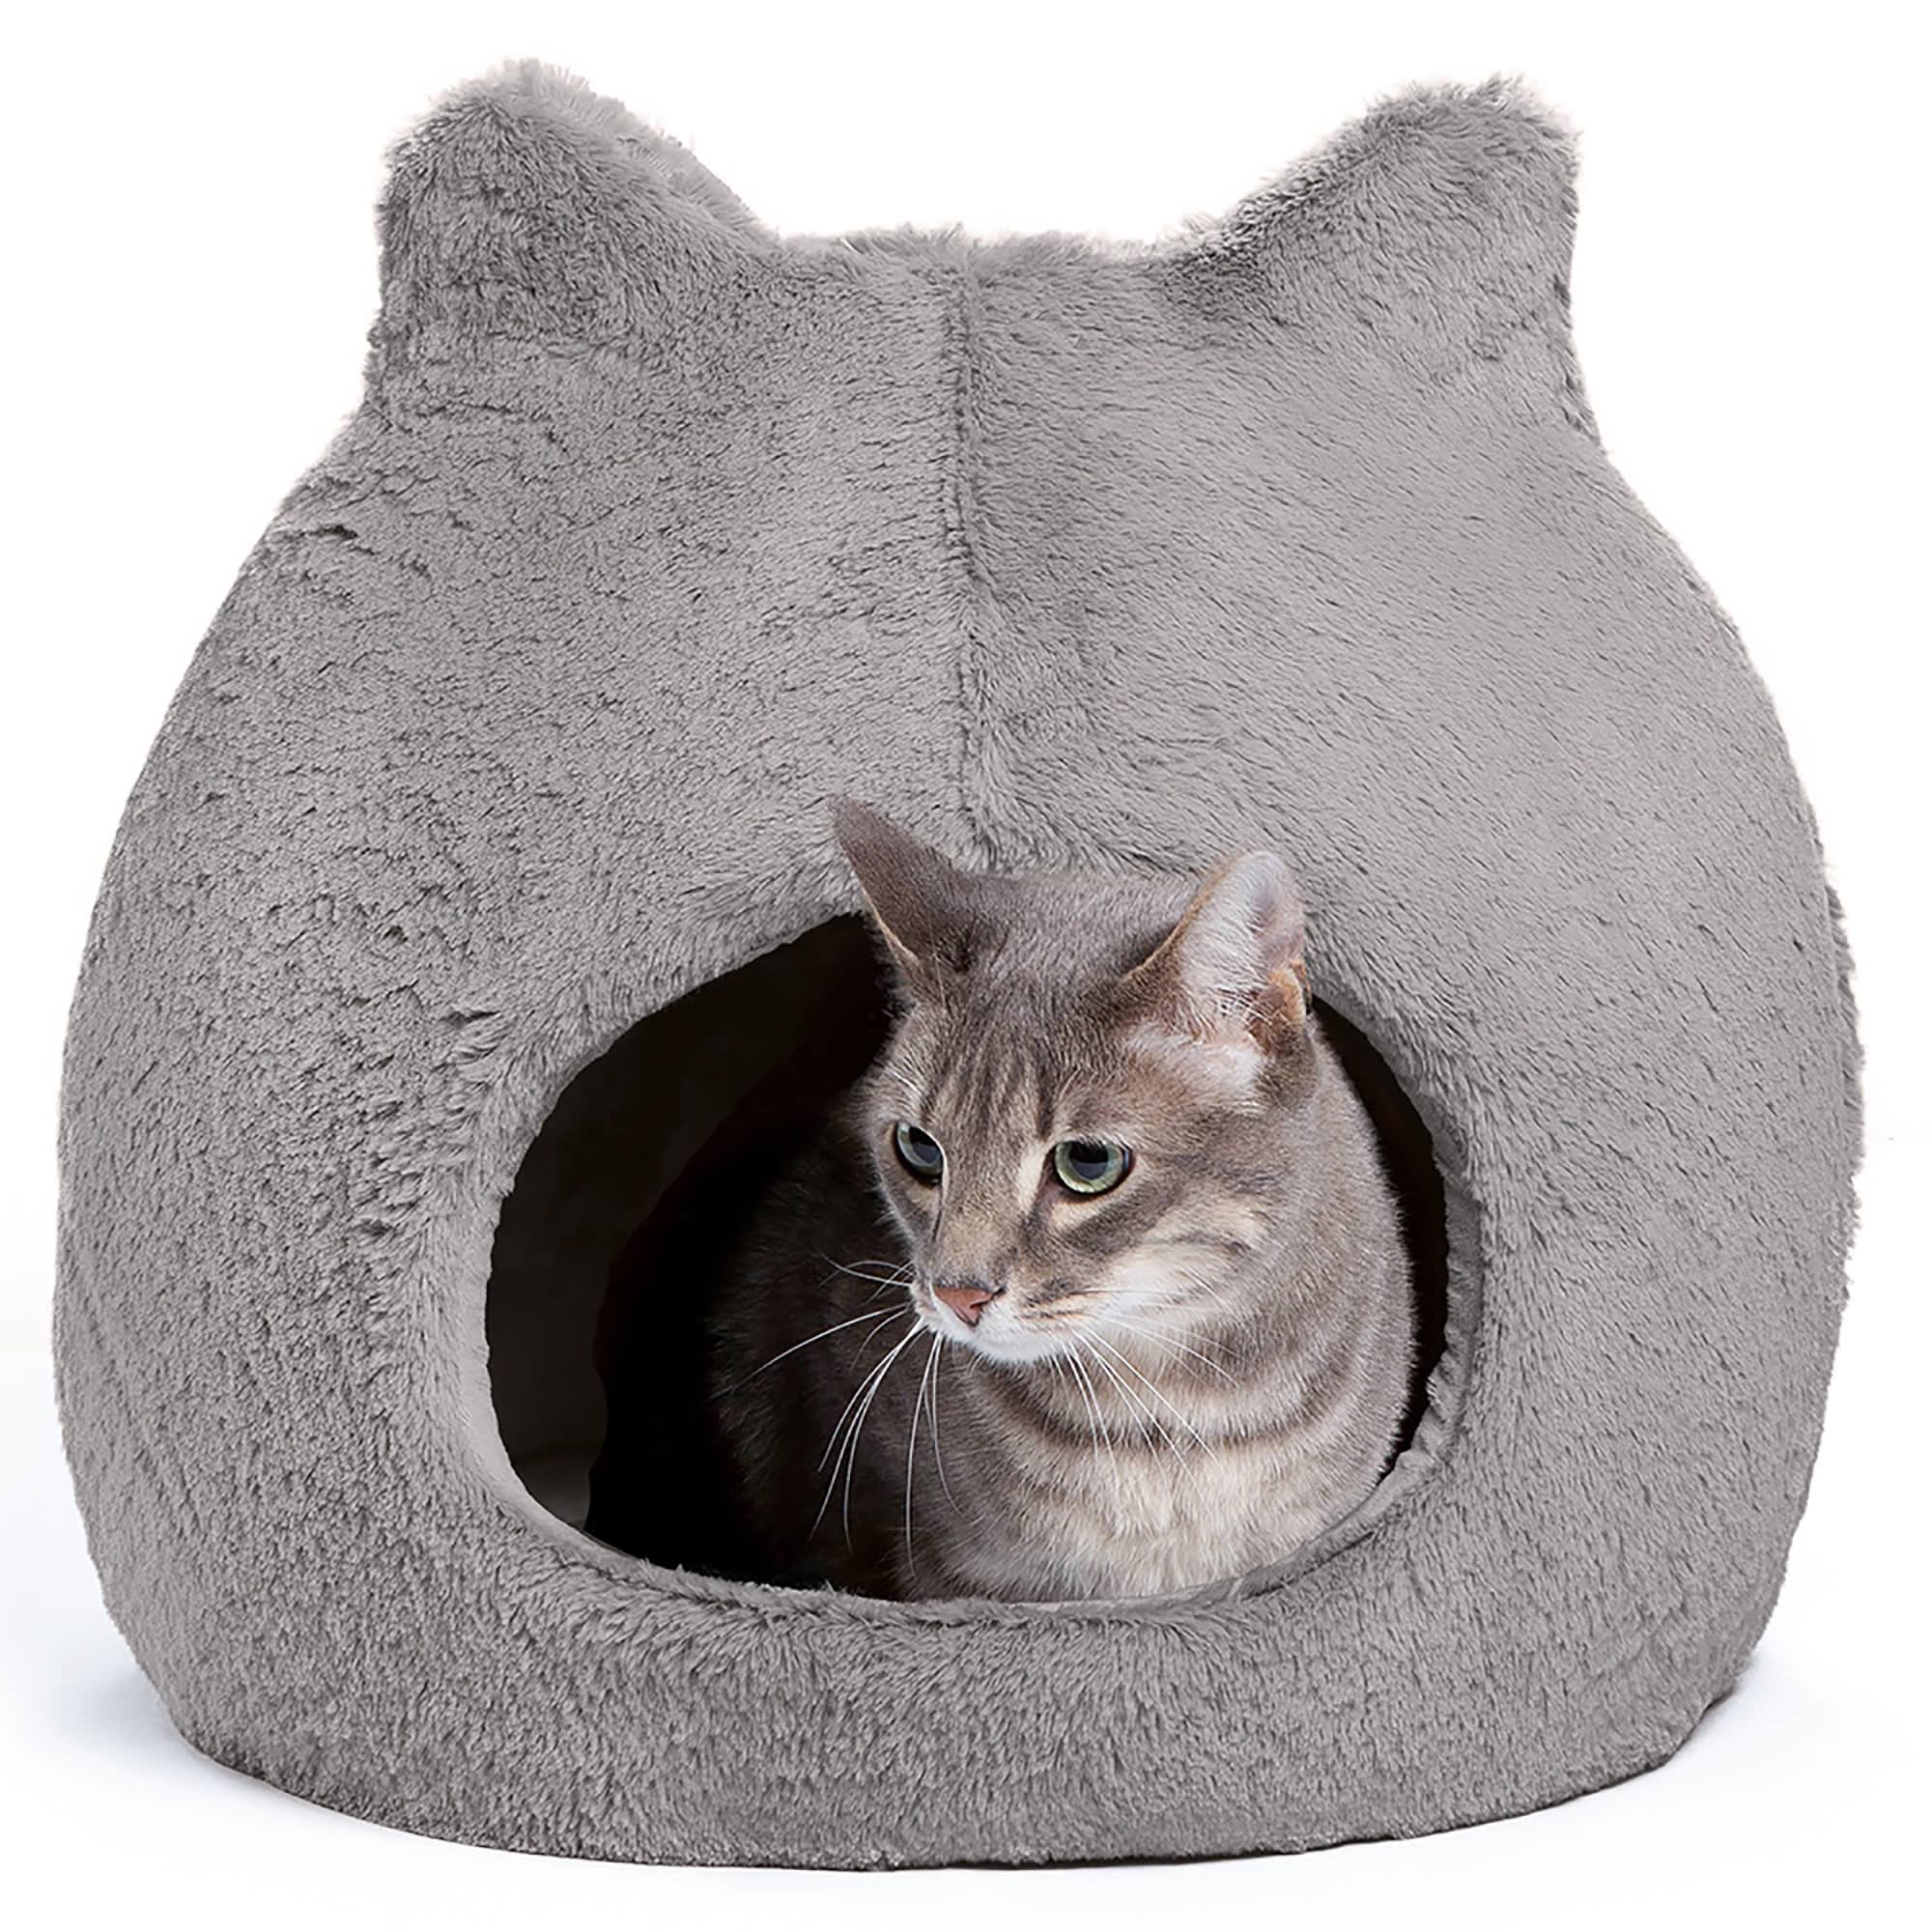 Best Friends by Sheri Meow Hut Fur Pet Cat Bed, Standard, Gray